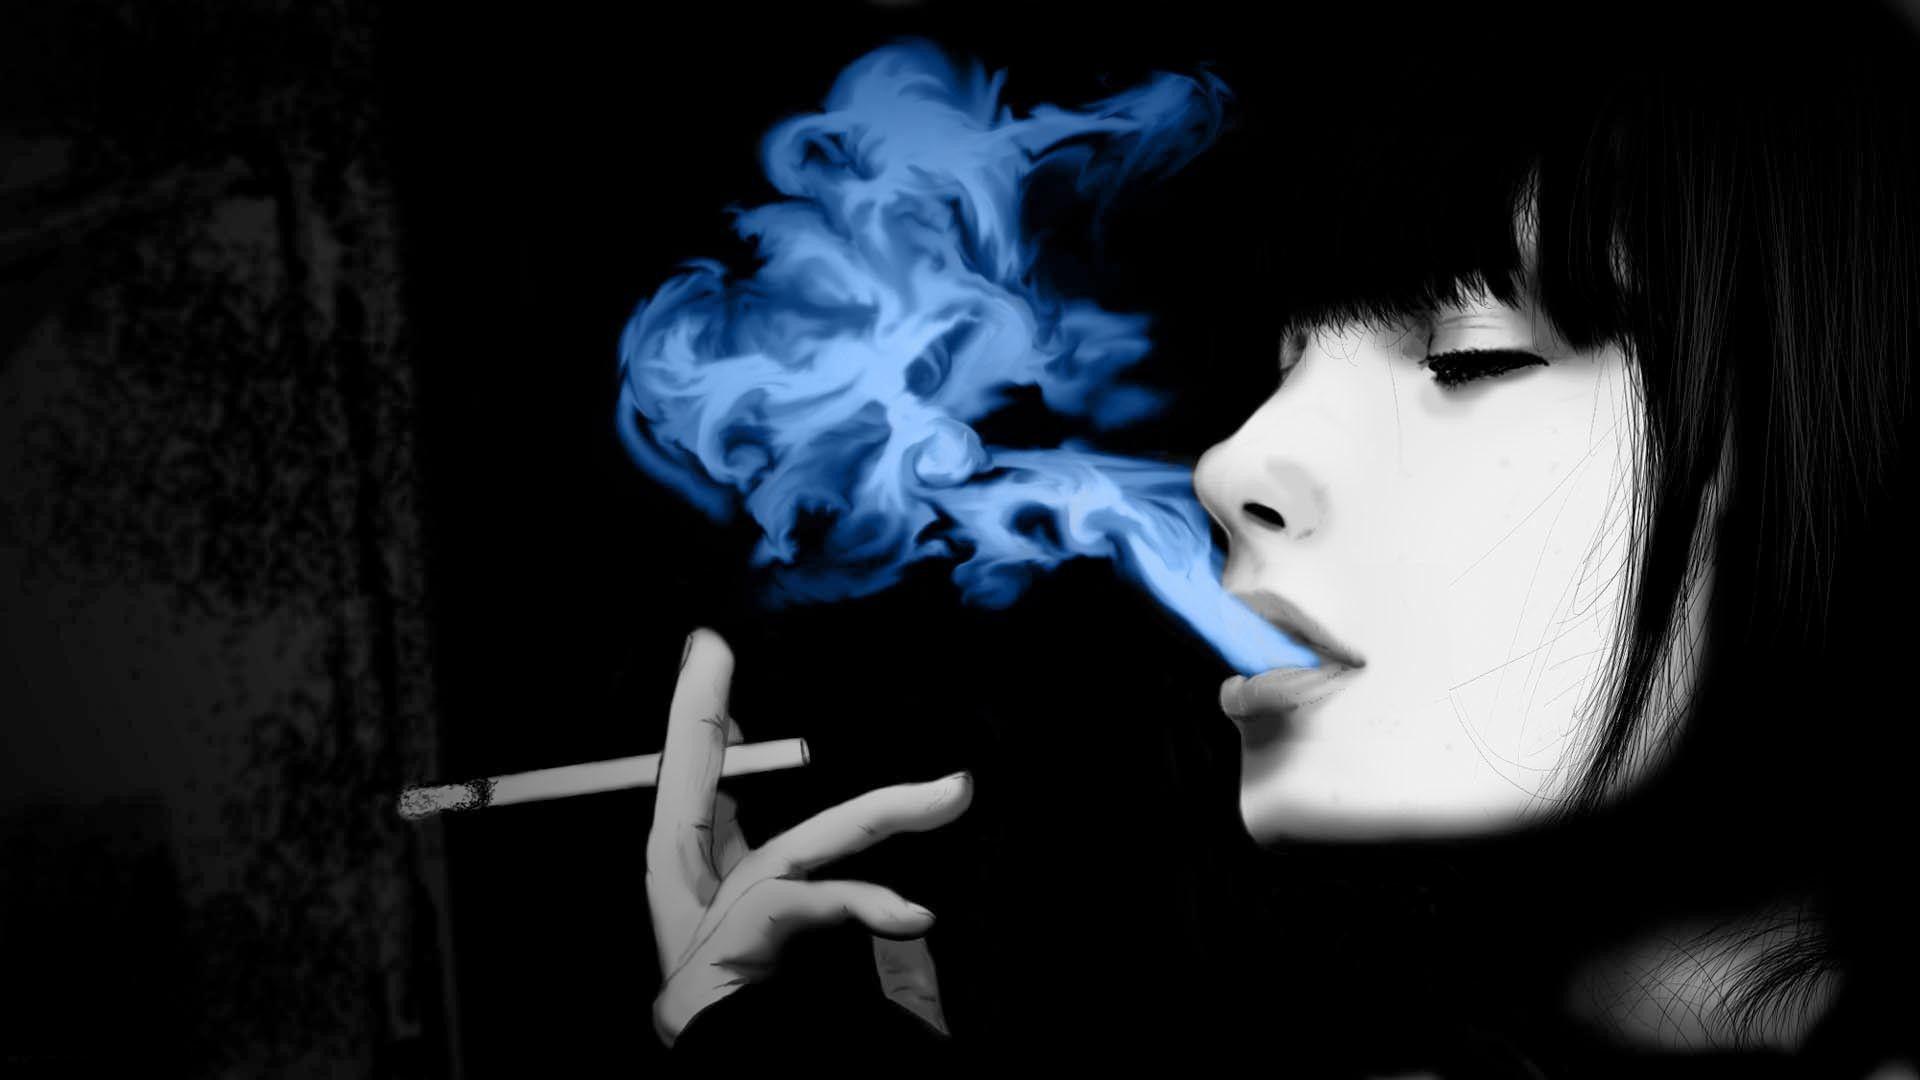 Smoking Wallpaper. Smoking Wallpaper, Attractive Women Smoking Wallpaper and Bad Girls Smoking Weed Wallpaper